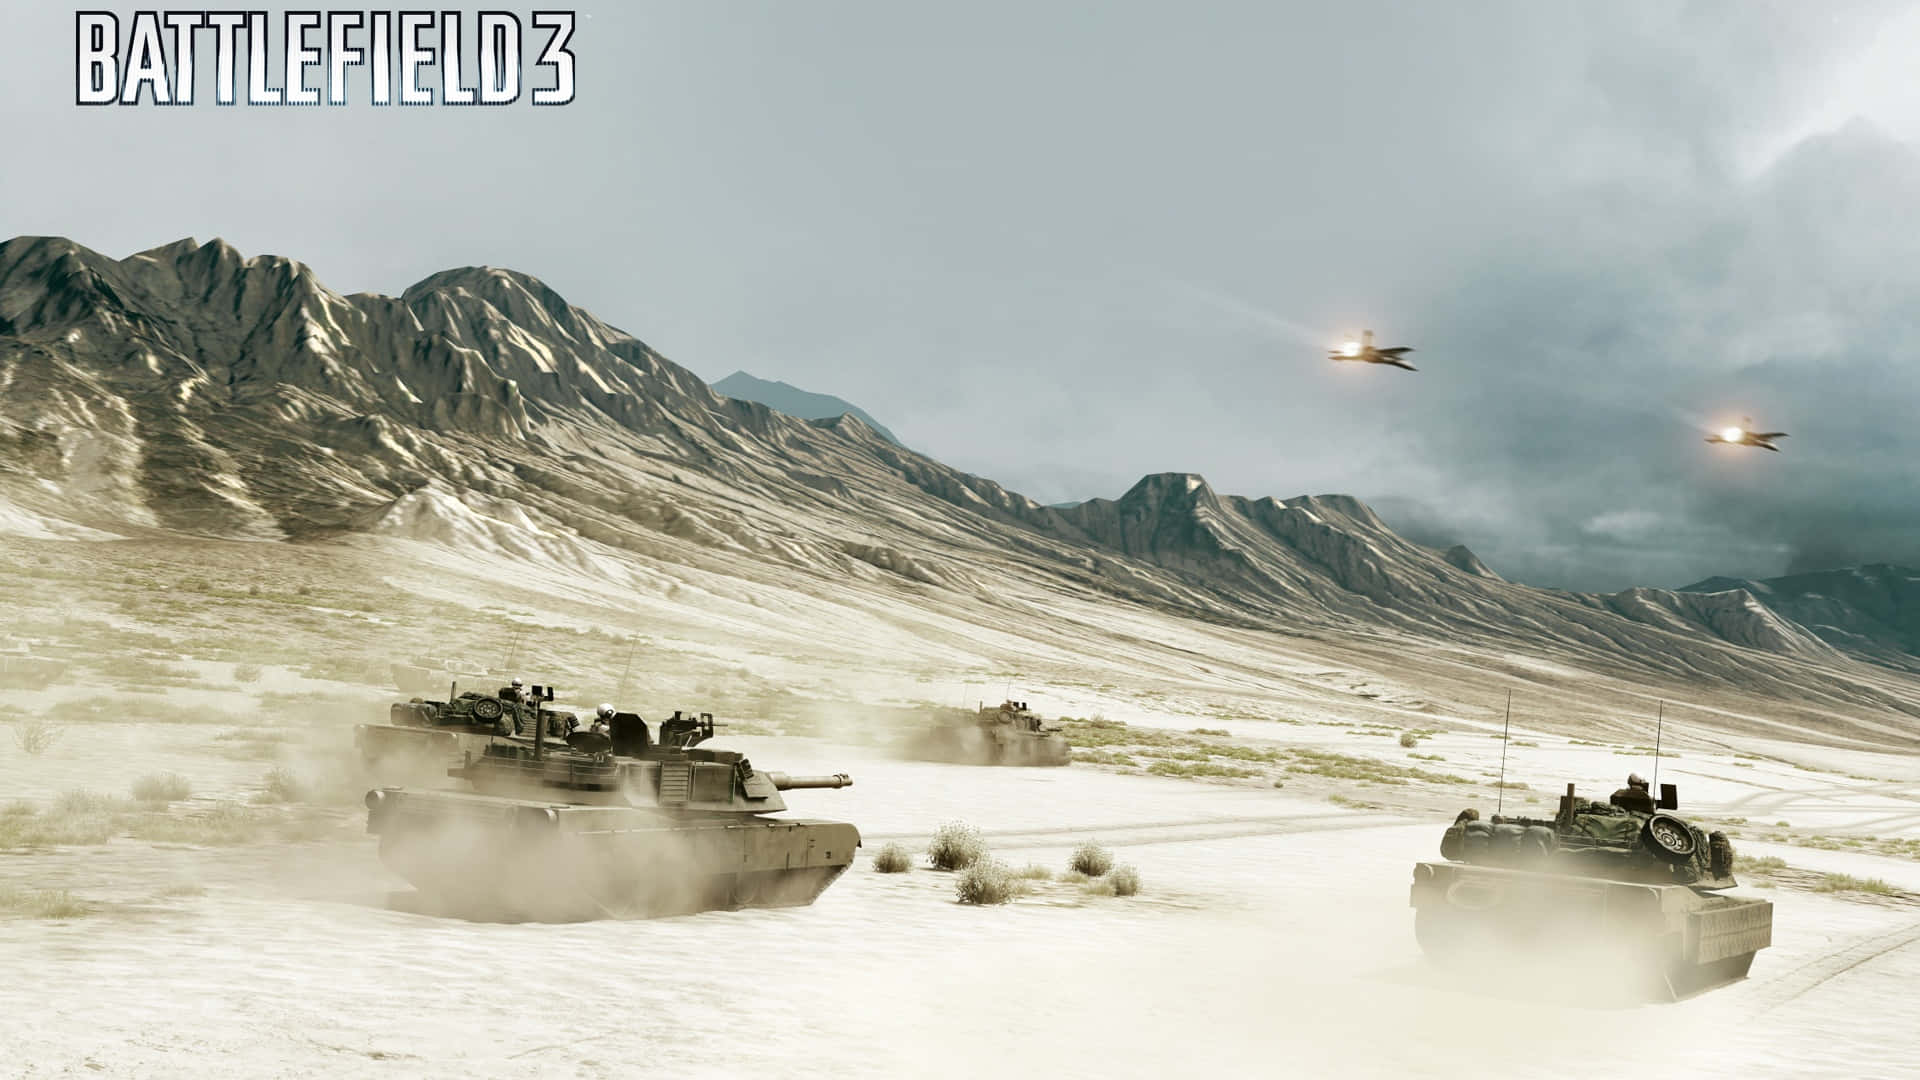 Intense Firefight on Battlefield 3